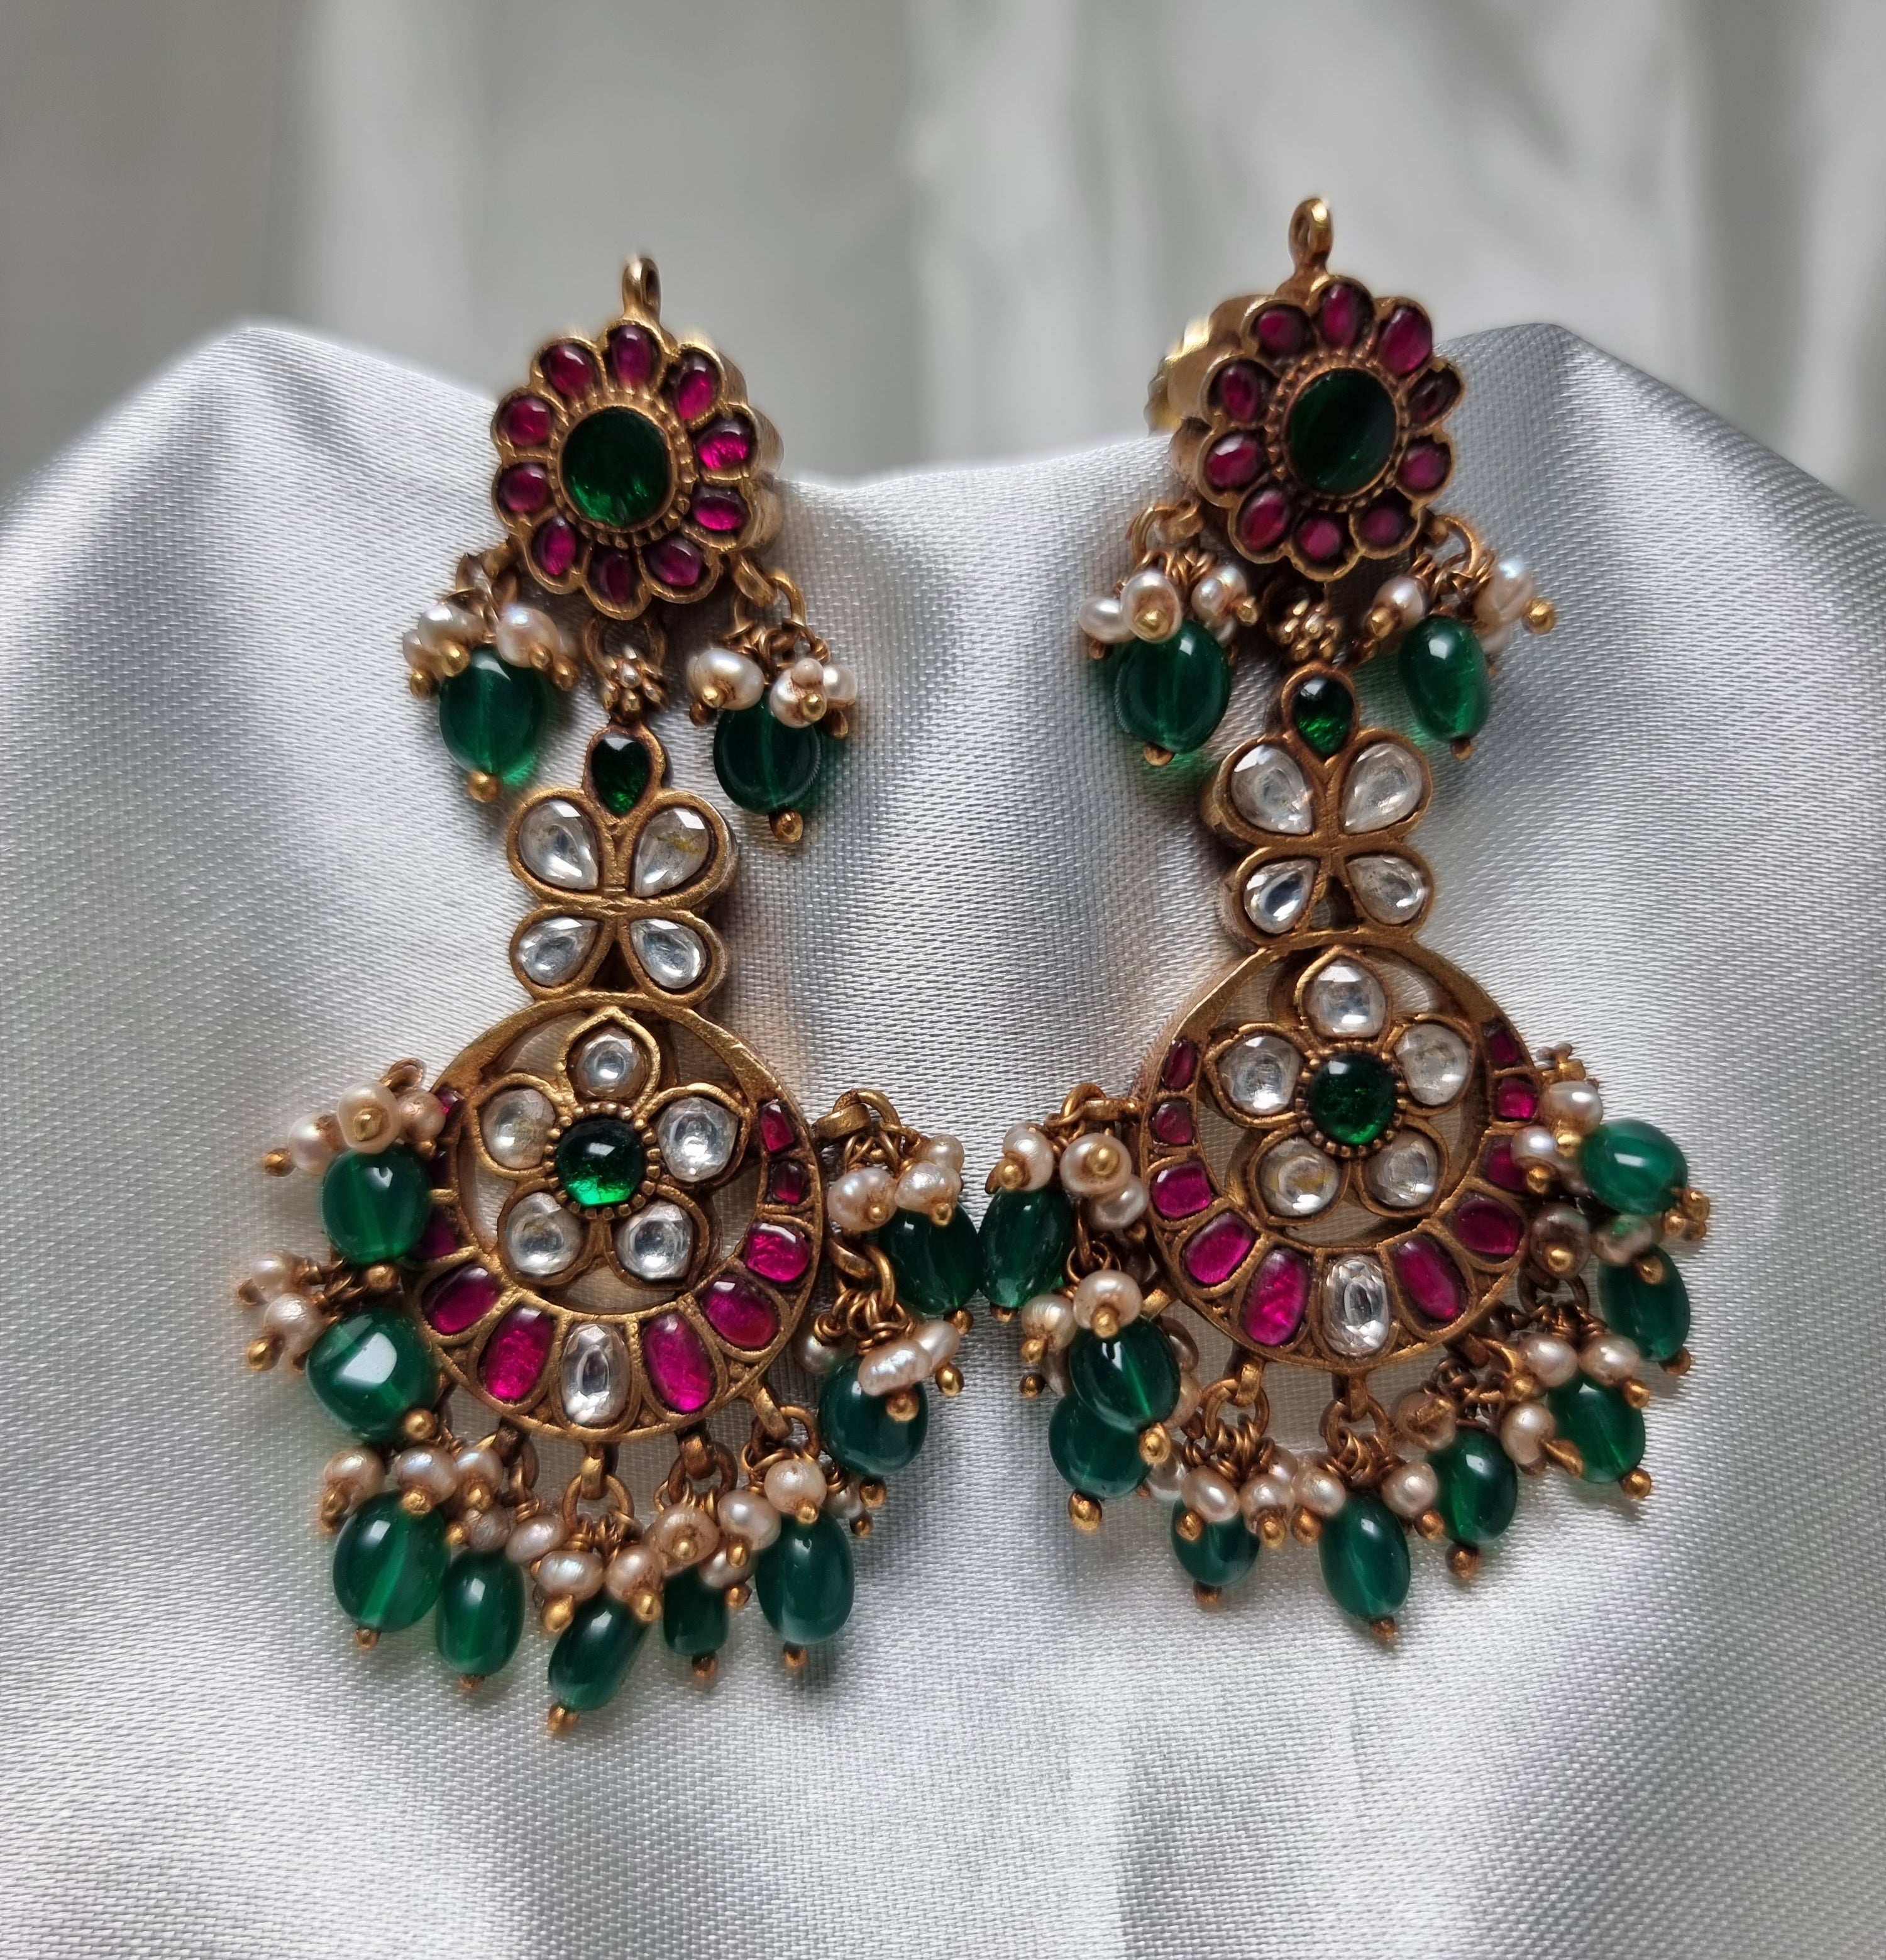 Teal Green Kundan Earrings/Meenakari Earrings/Indian Earring/Indian Jewelry  | eBay